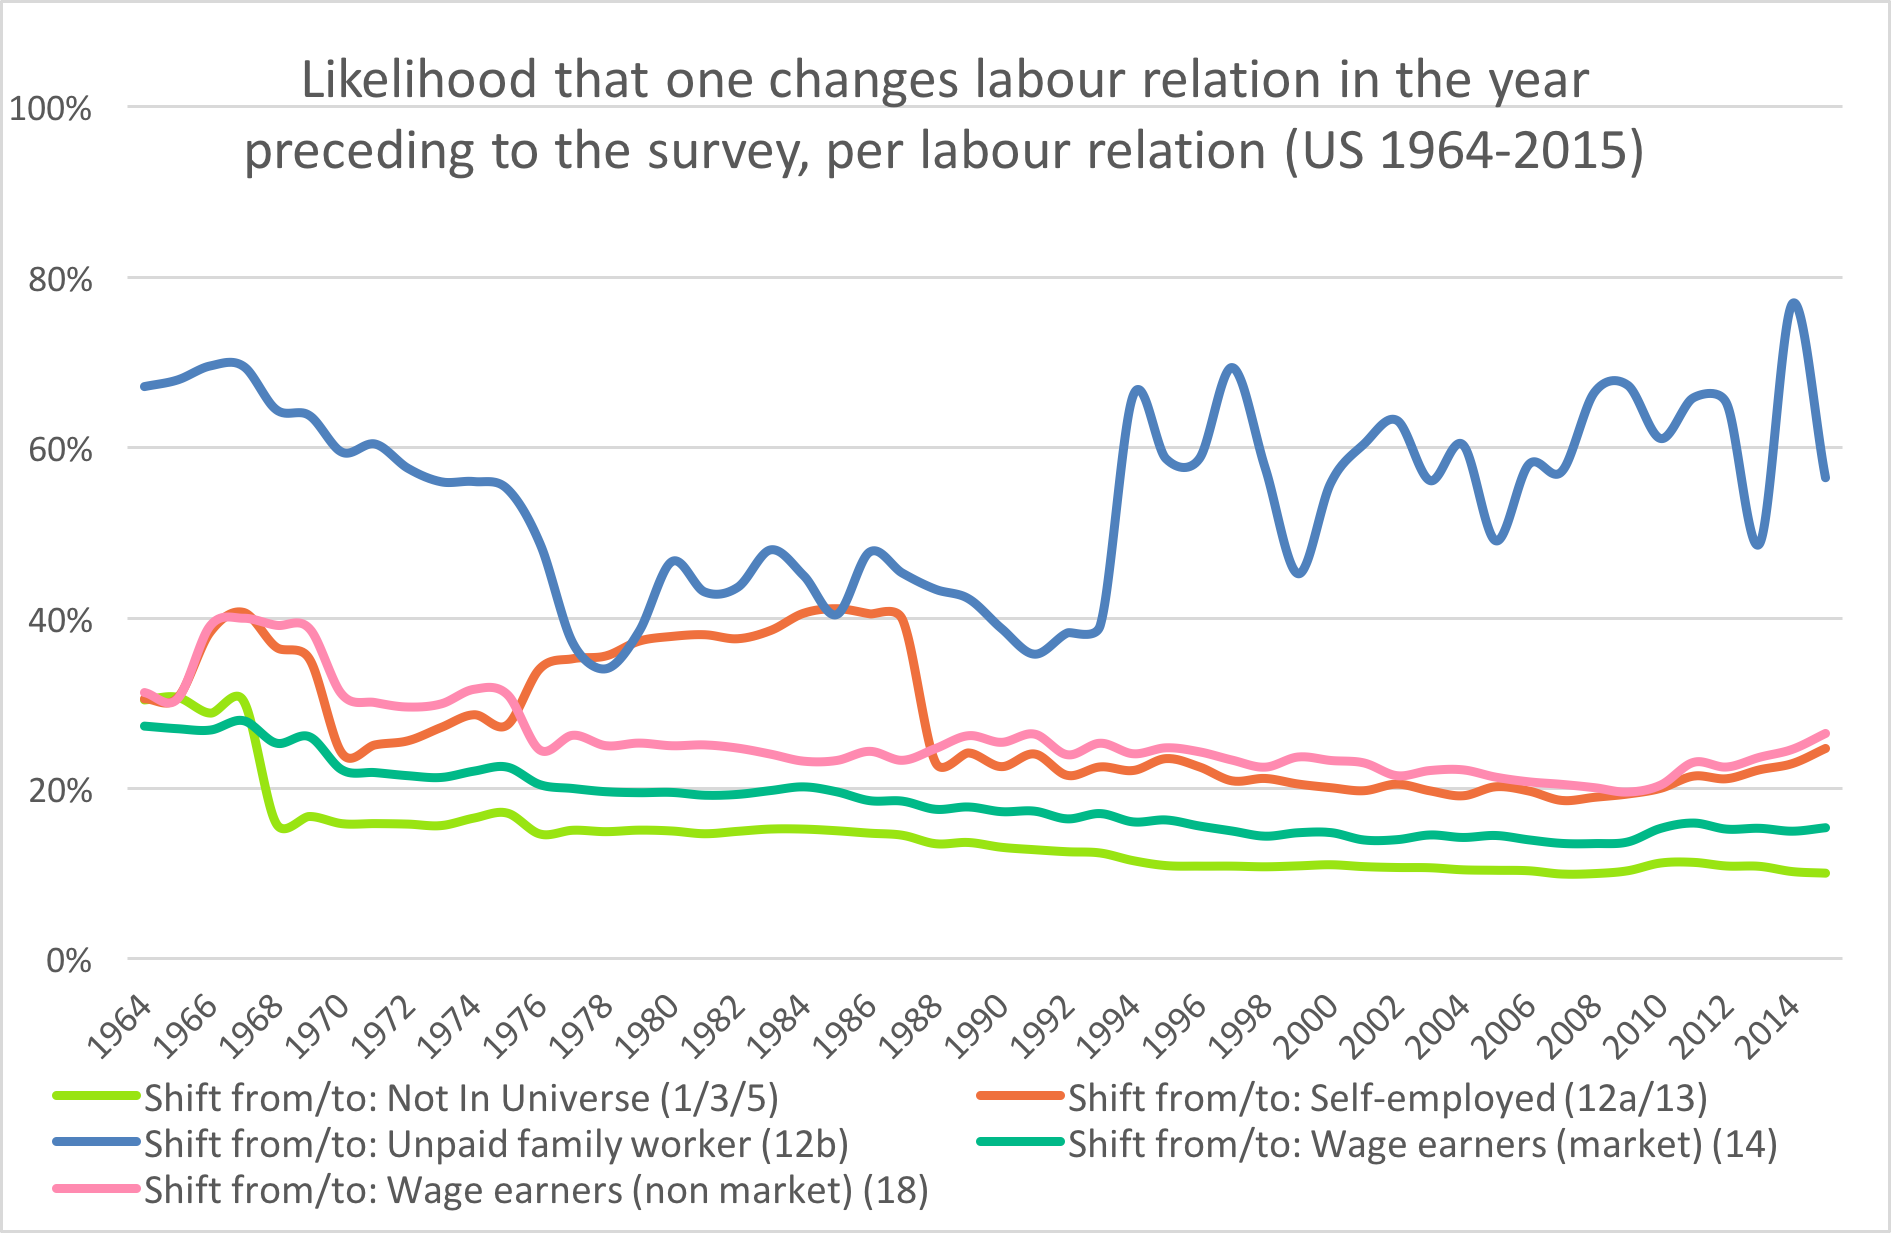 Figure 2. Likelihood that one changes labour relation